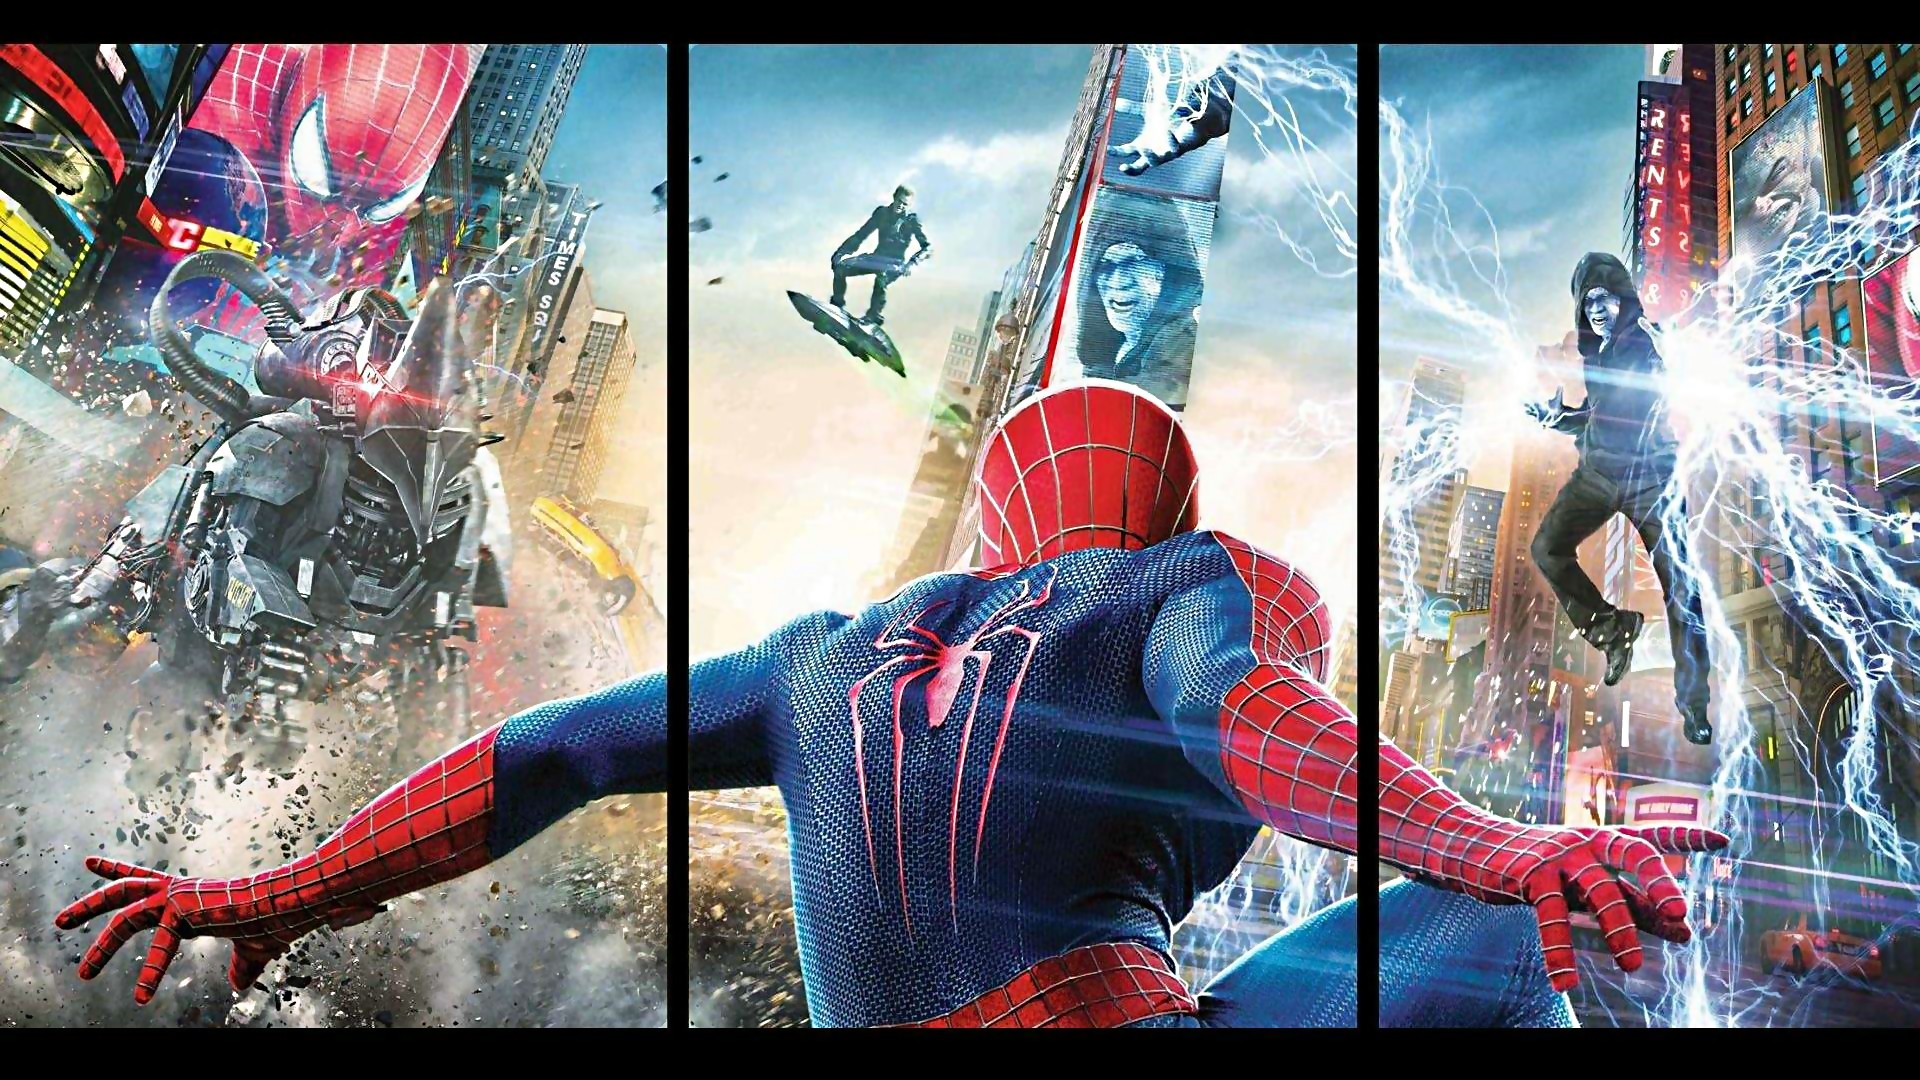 1920x1080 ProfessorAdagio 898 17 The Amazing Spider-Man 2 Movie Poster Wallpaper #1  by ProfessorAdagio